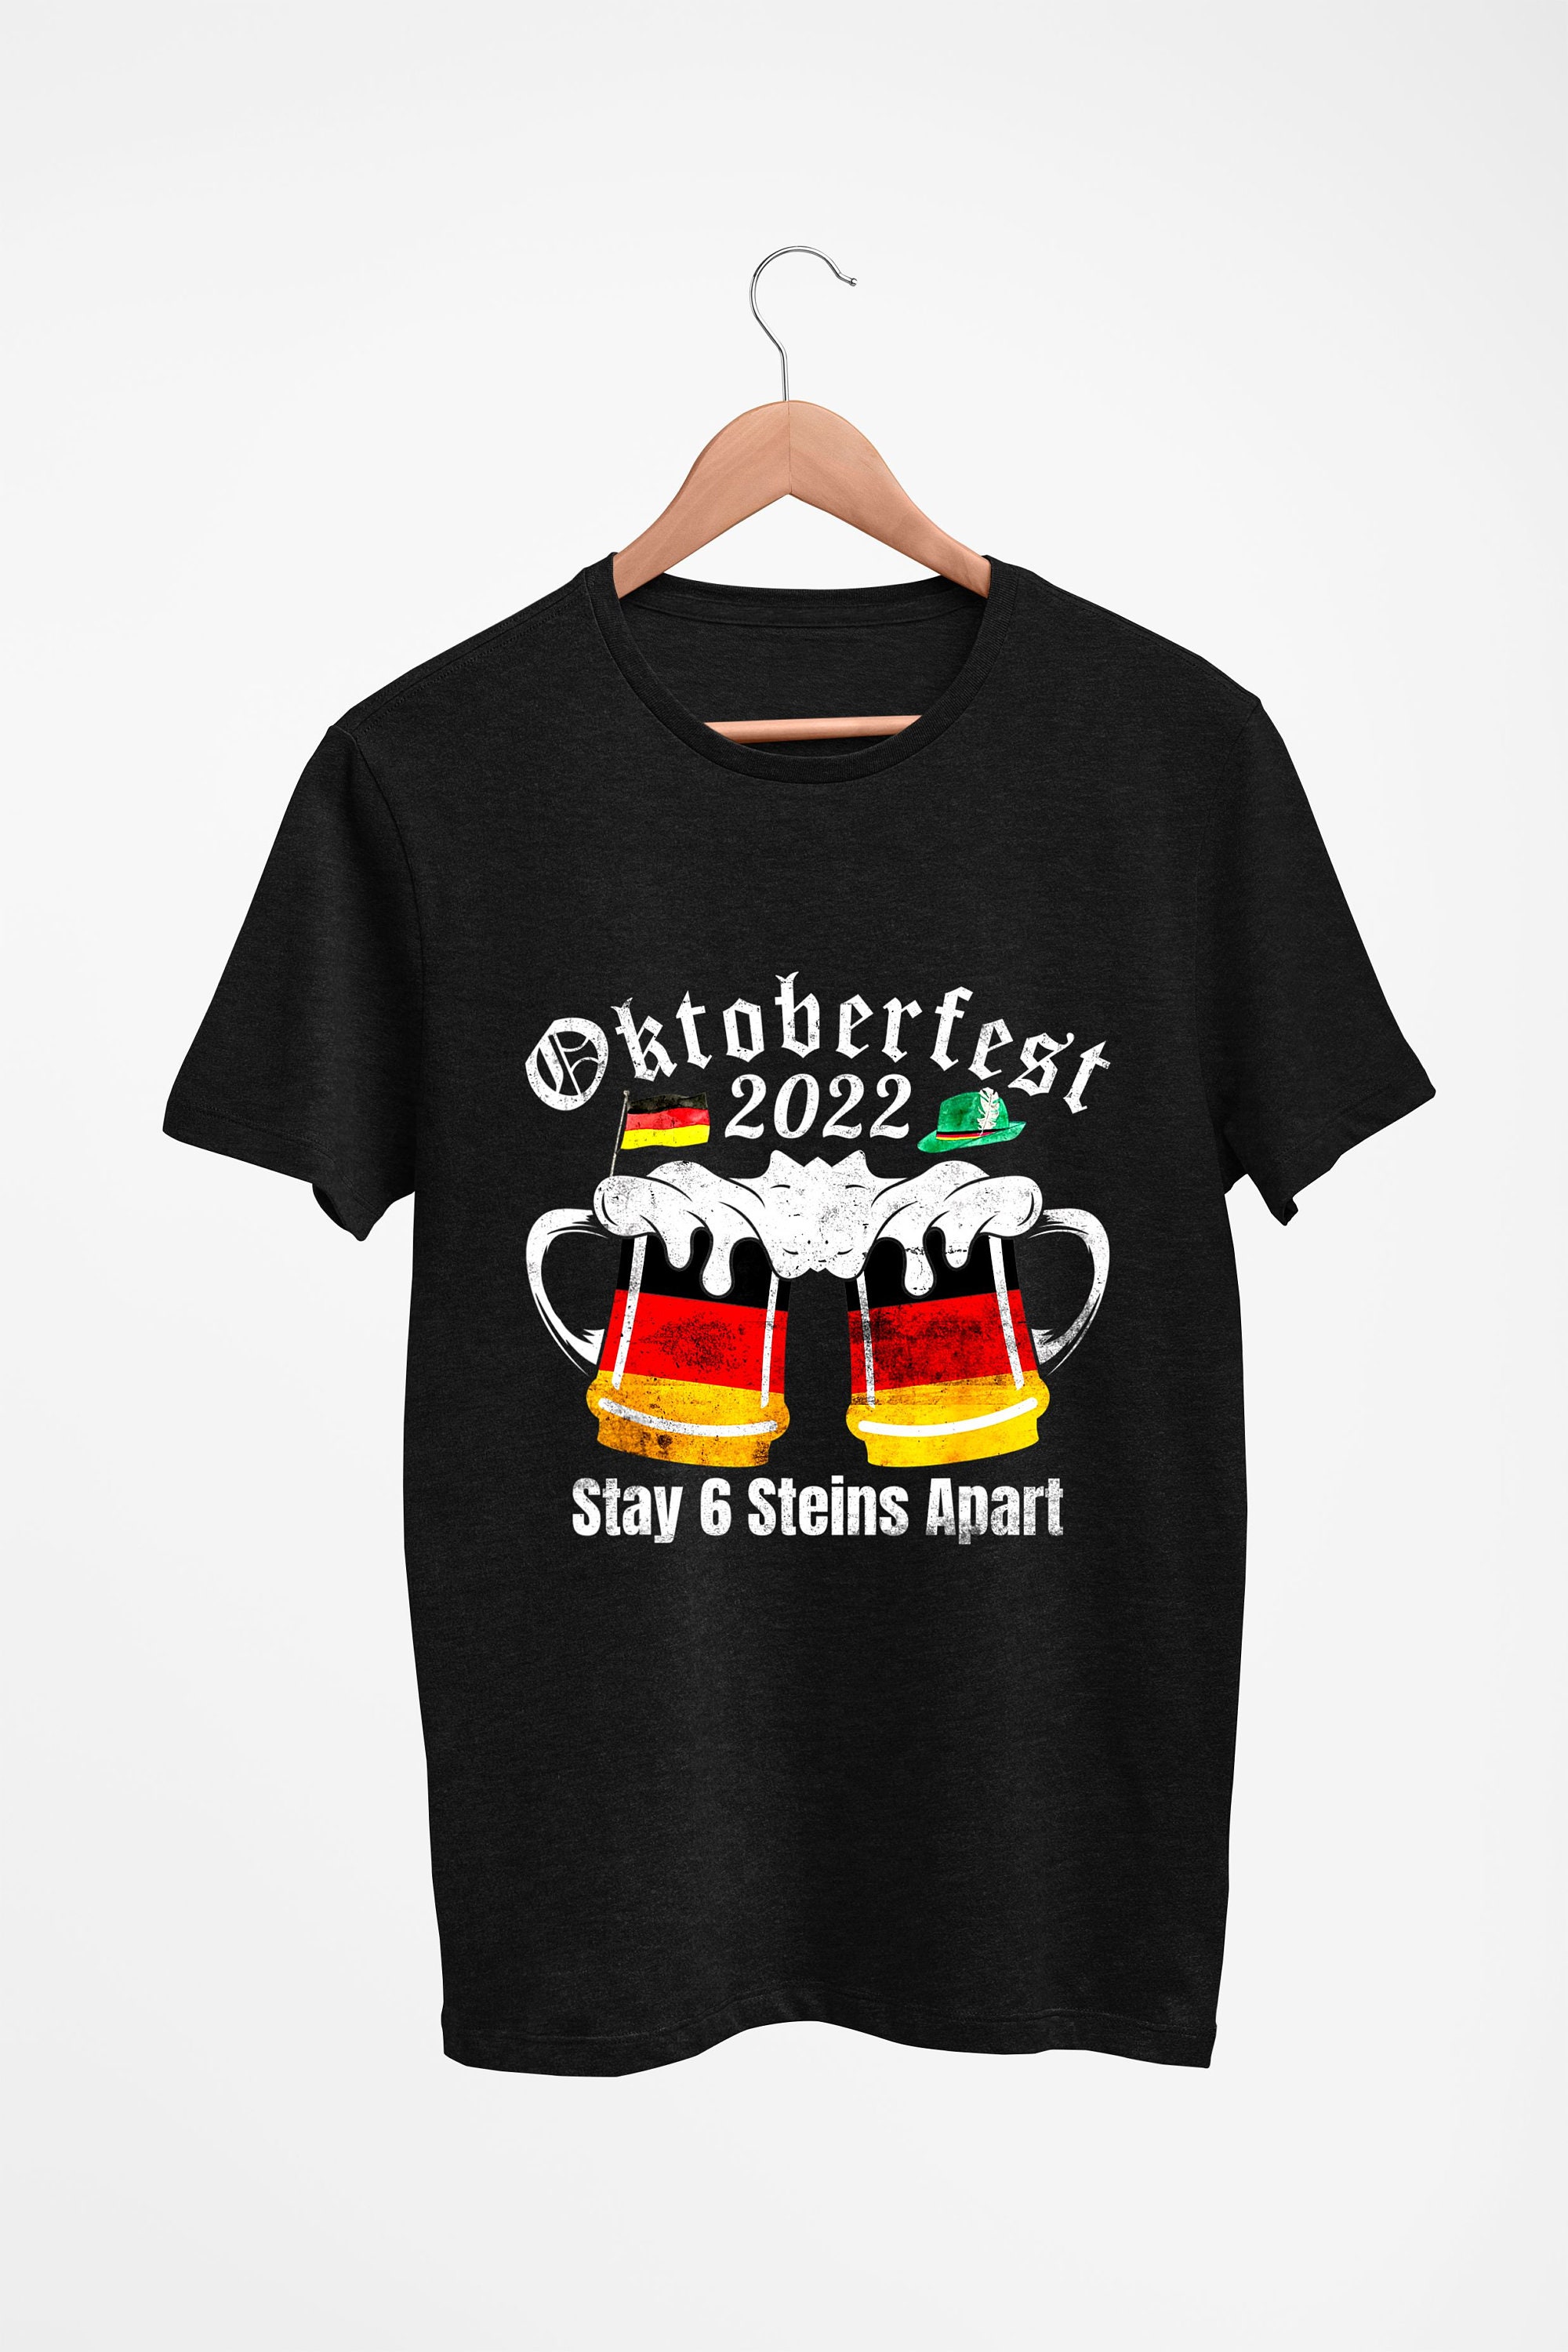 Discover Oktoberfest 2022 6 Stein Apart Bier T-Shirt